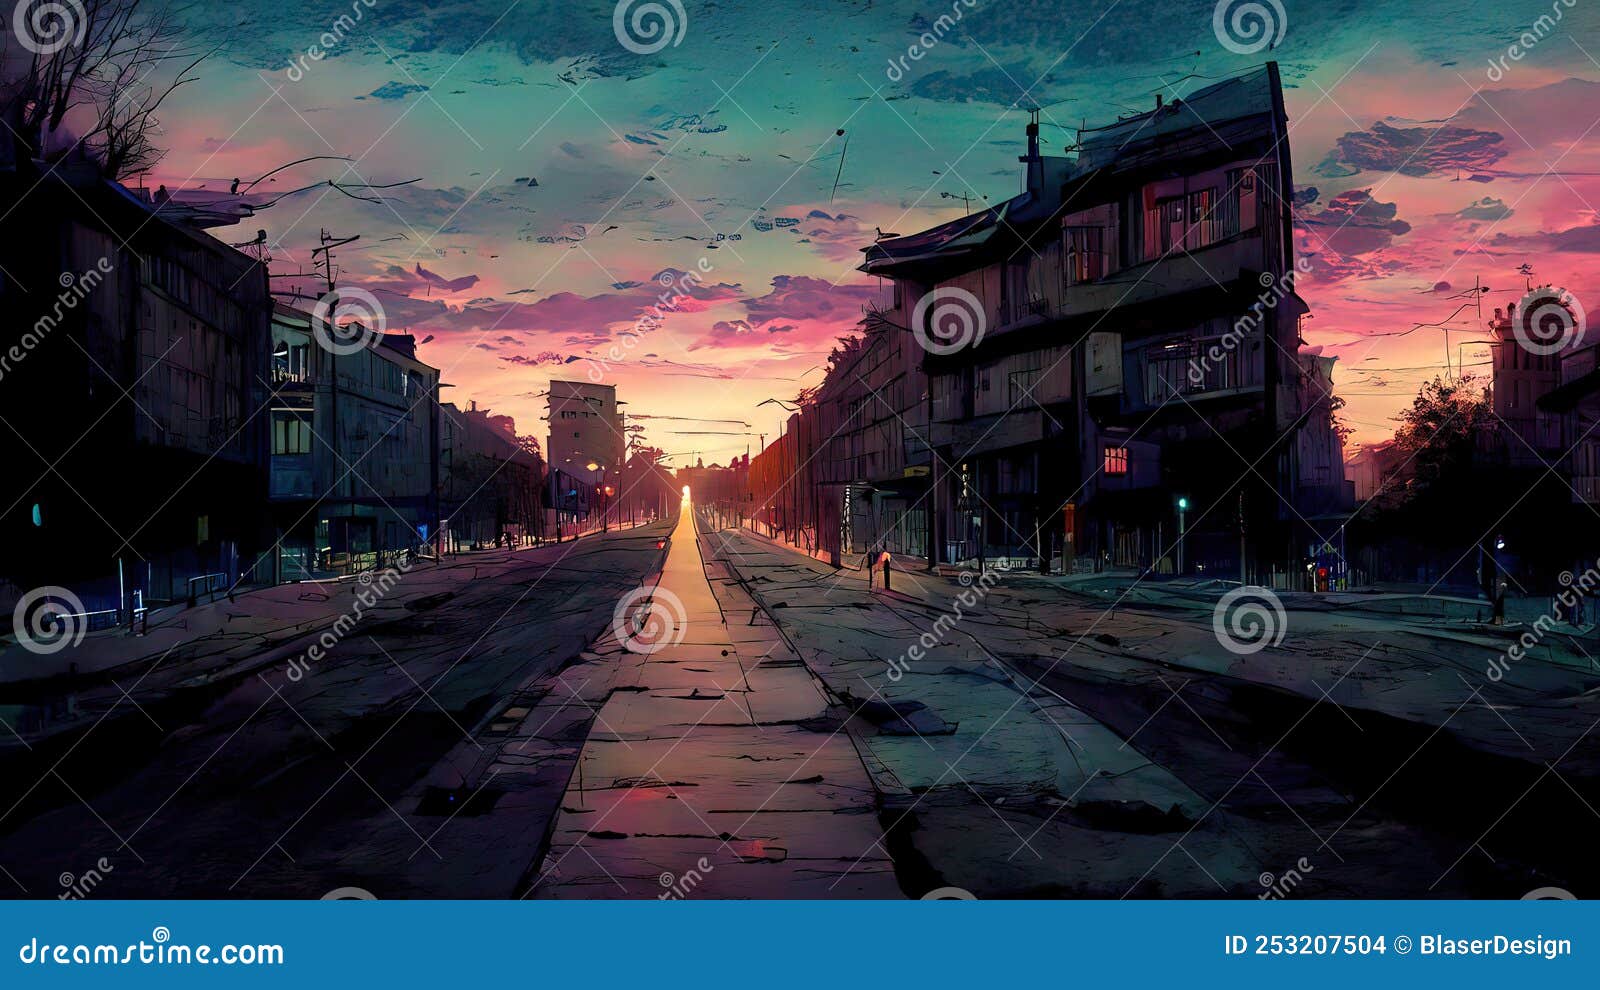 Anime field at dusk - Best htc one wallpapers | Landscape art, Scenery  wallpaper, Anime scenery